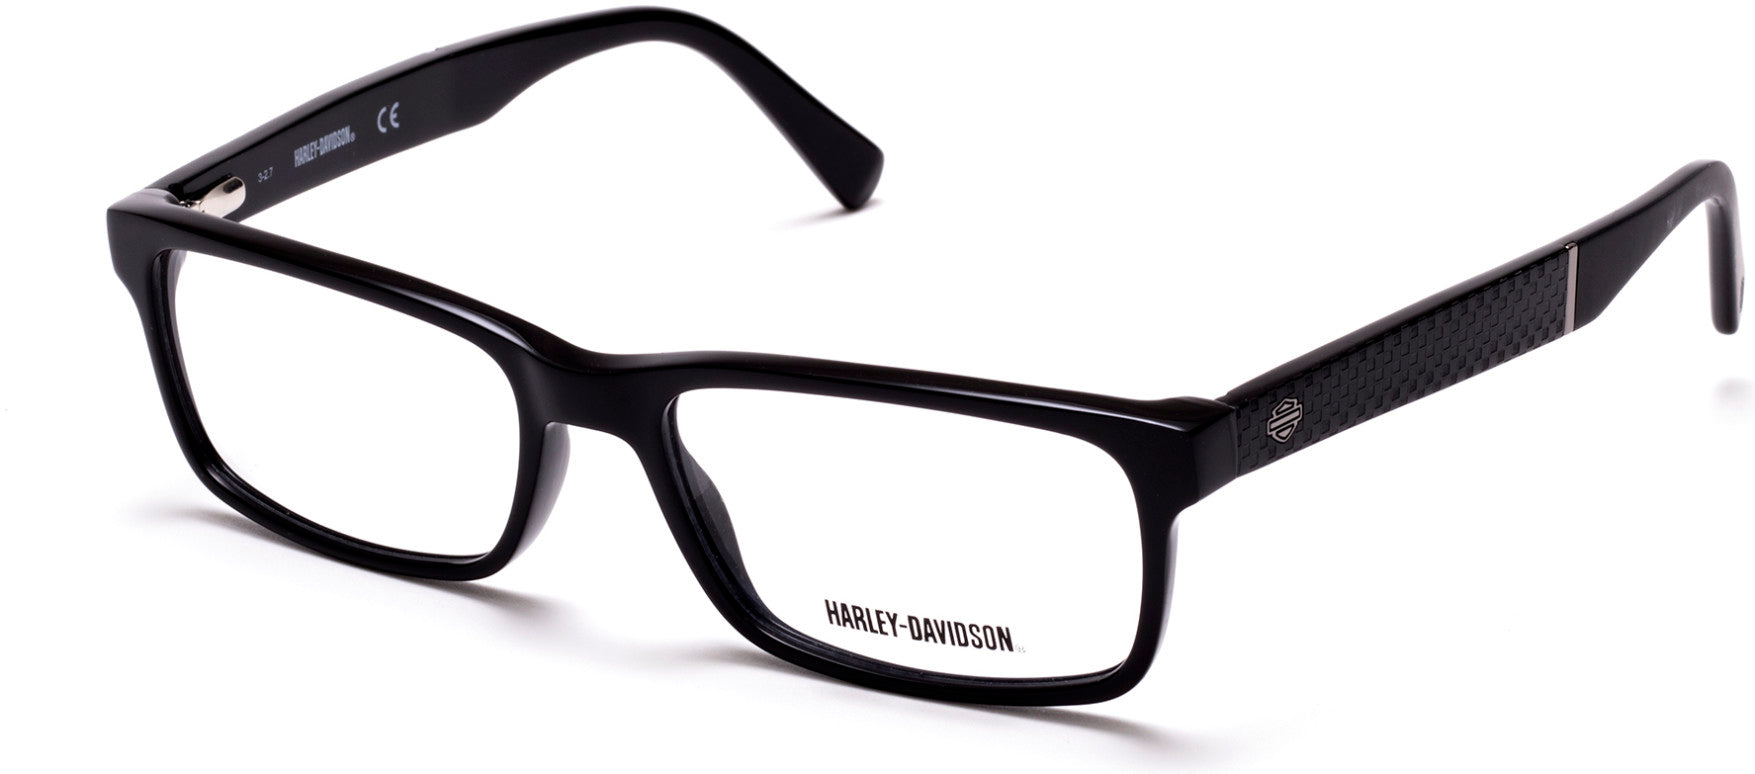 Harley-Davidson HD0774 Geometric Eyeglasses 001-001 - Shiny Black